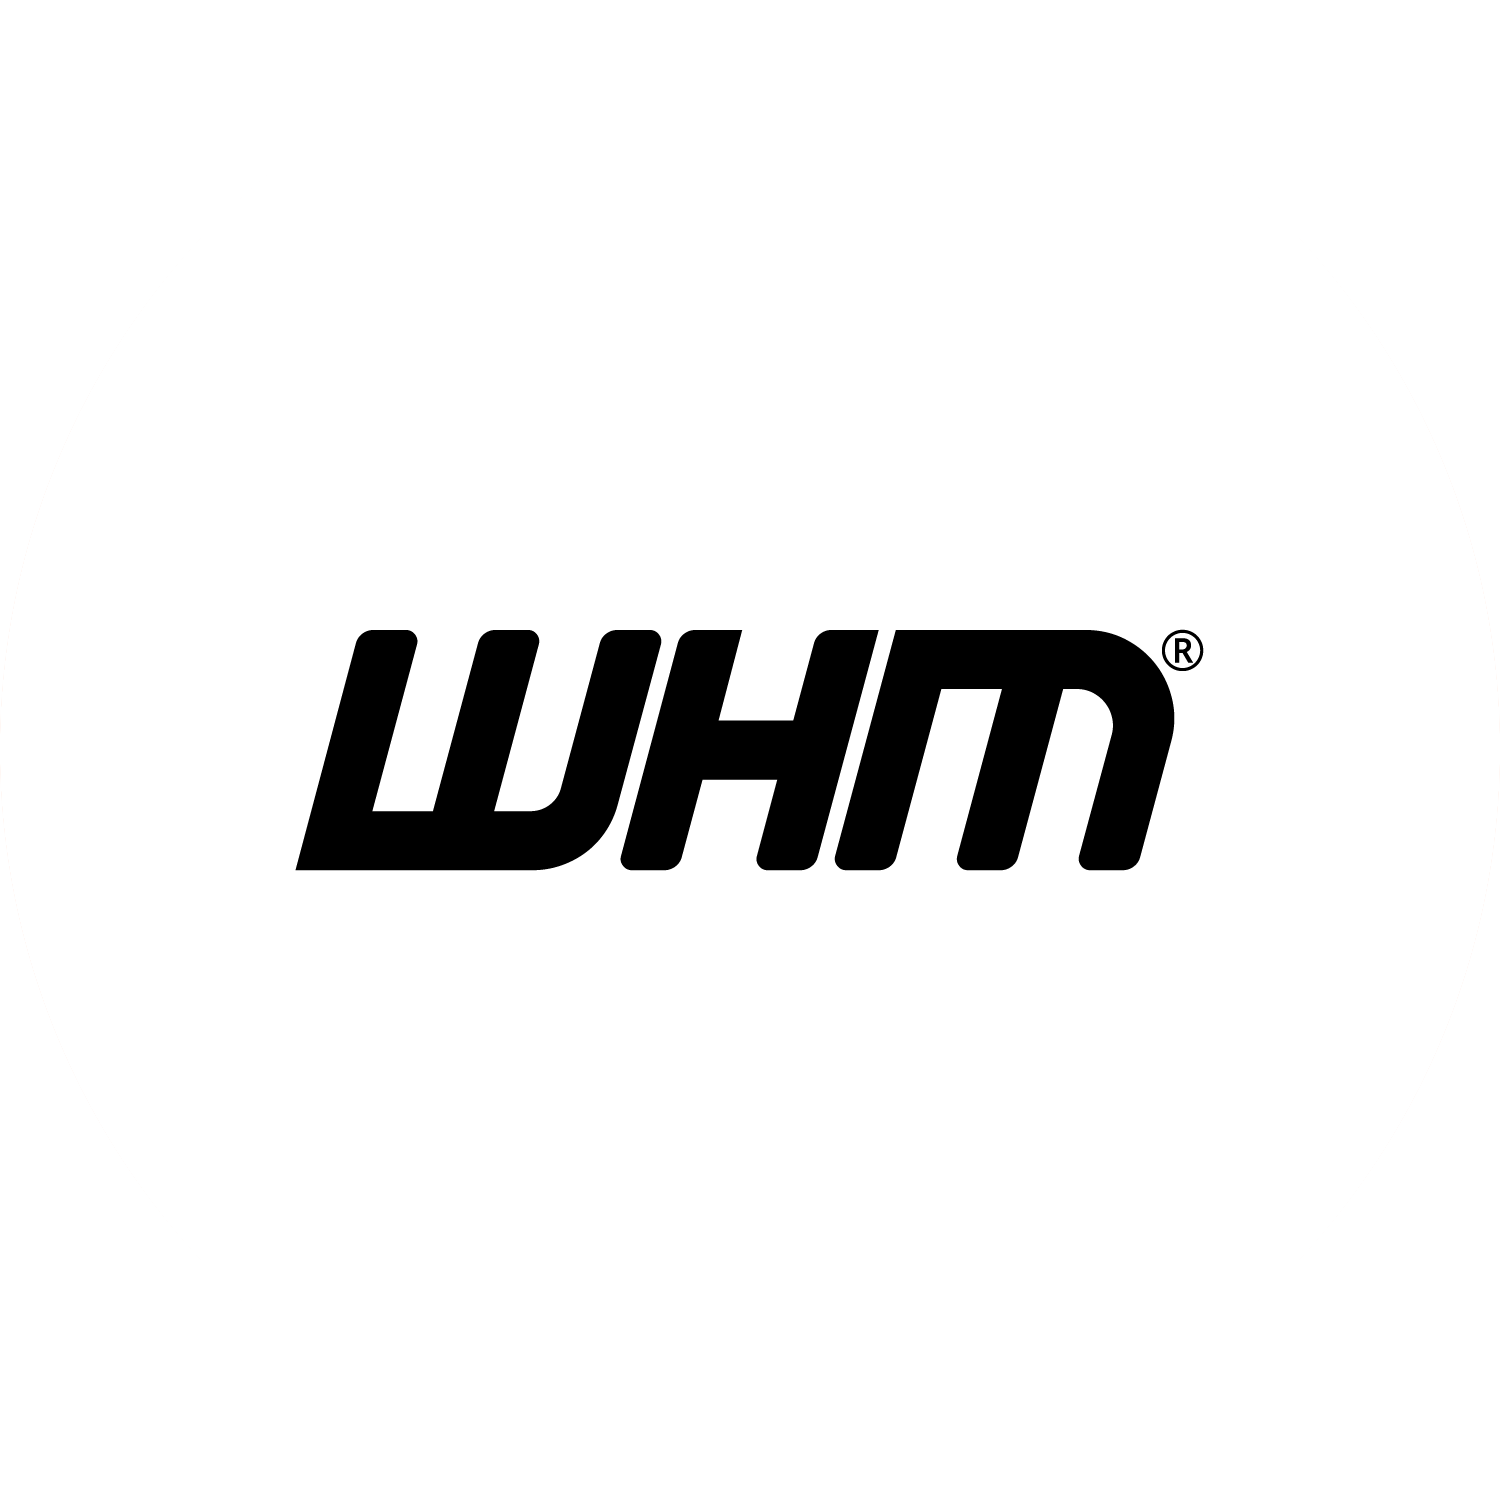 WHM Logo Transparent Gallery